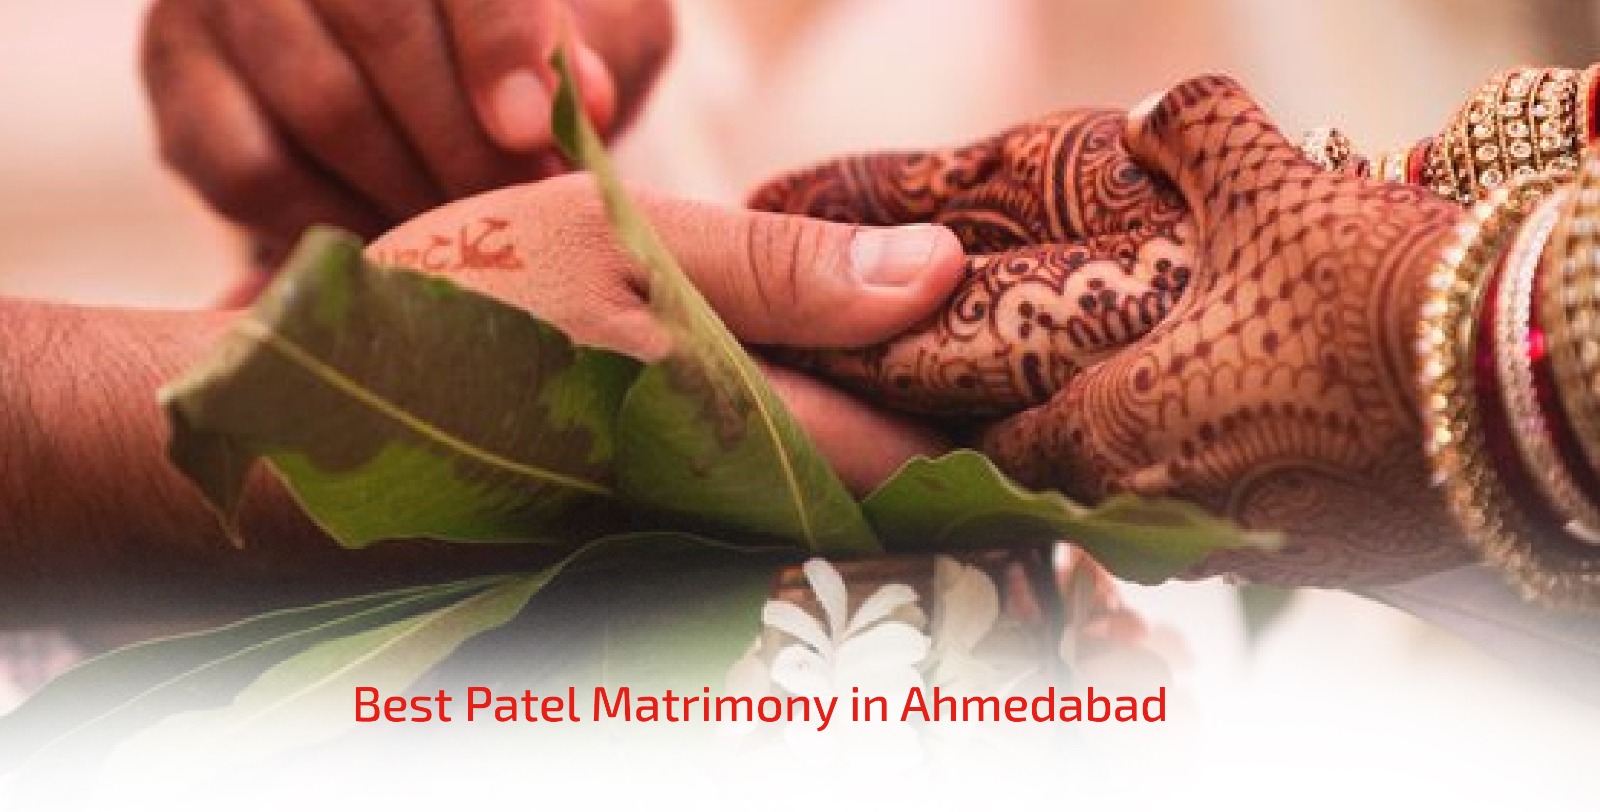 Best Patel Matrimony in Ahmedabad